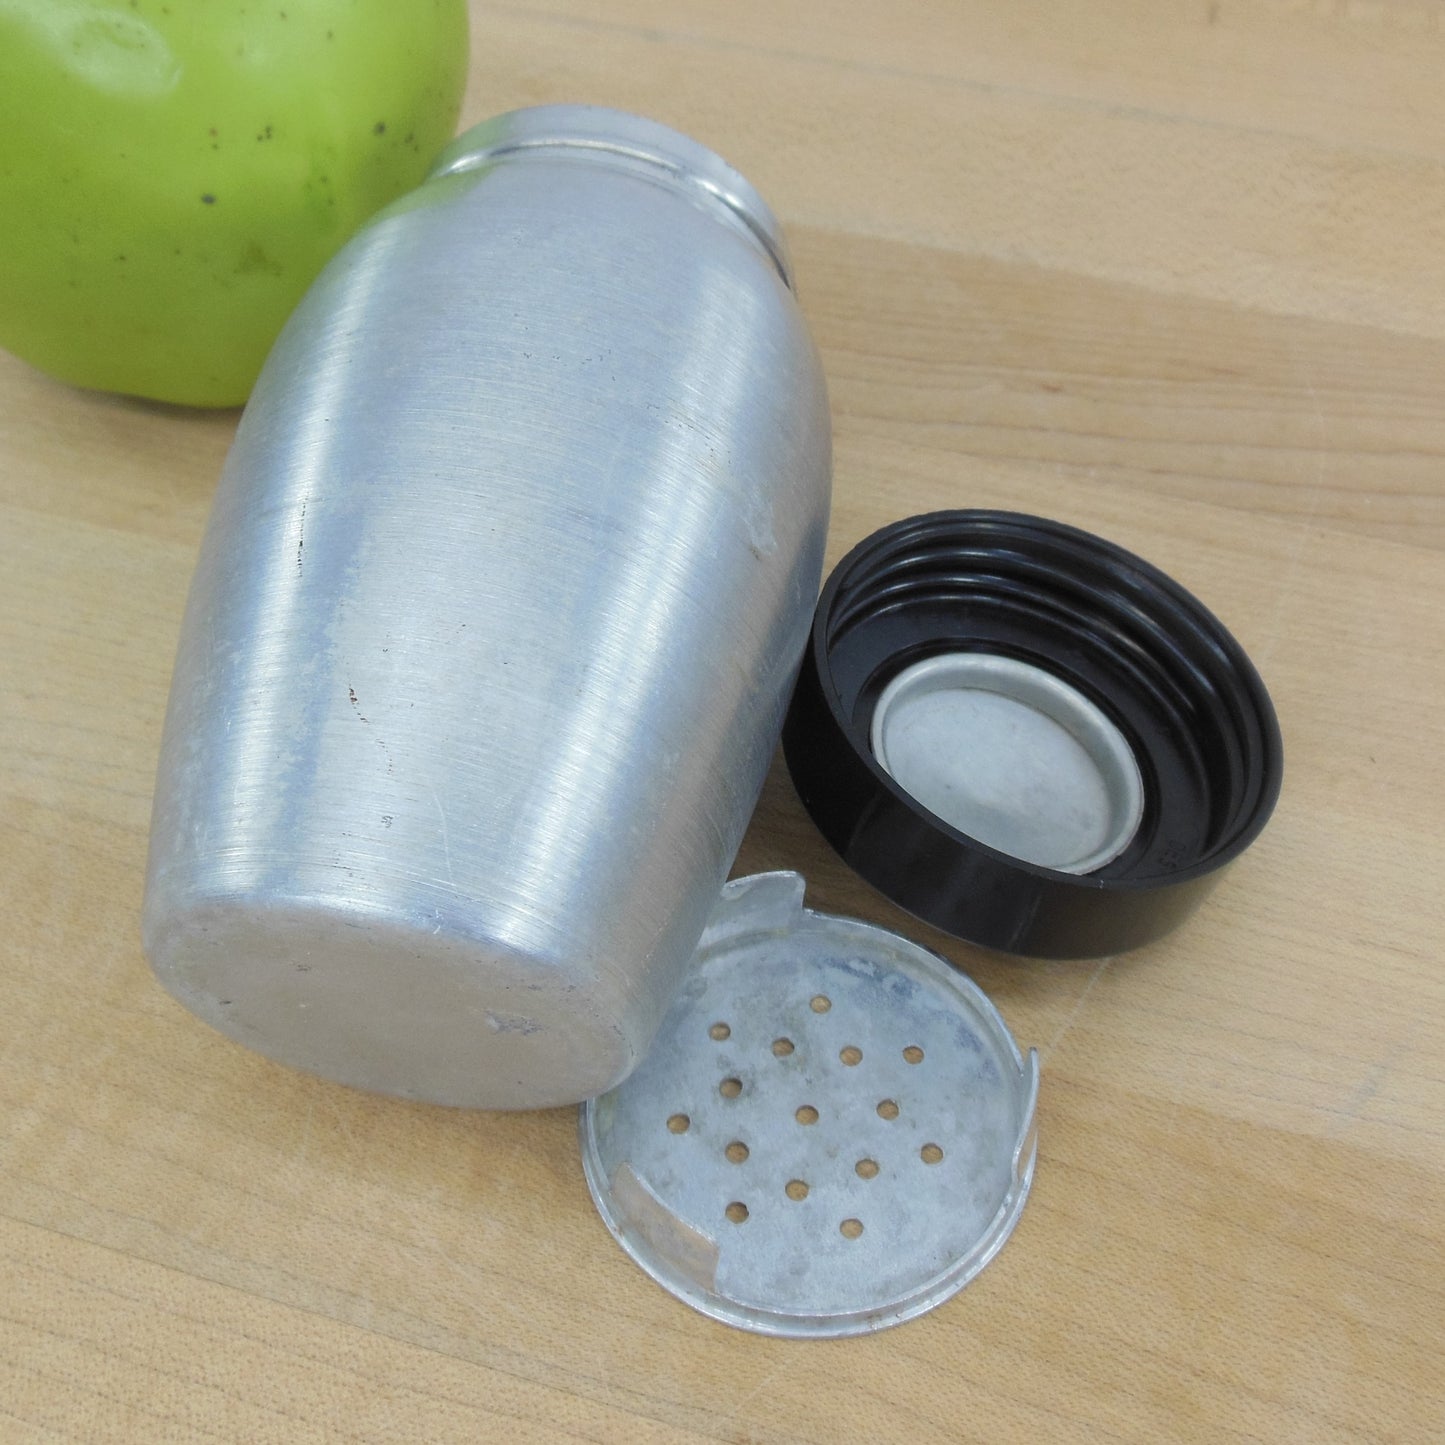 Kromex Natural Aluminum Nutmeg Spice Container Jar used